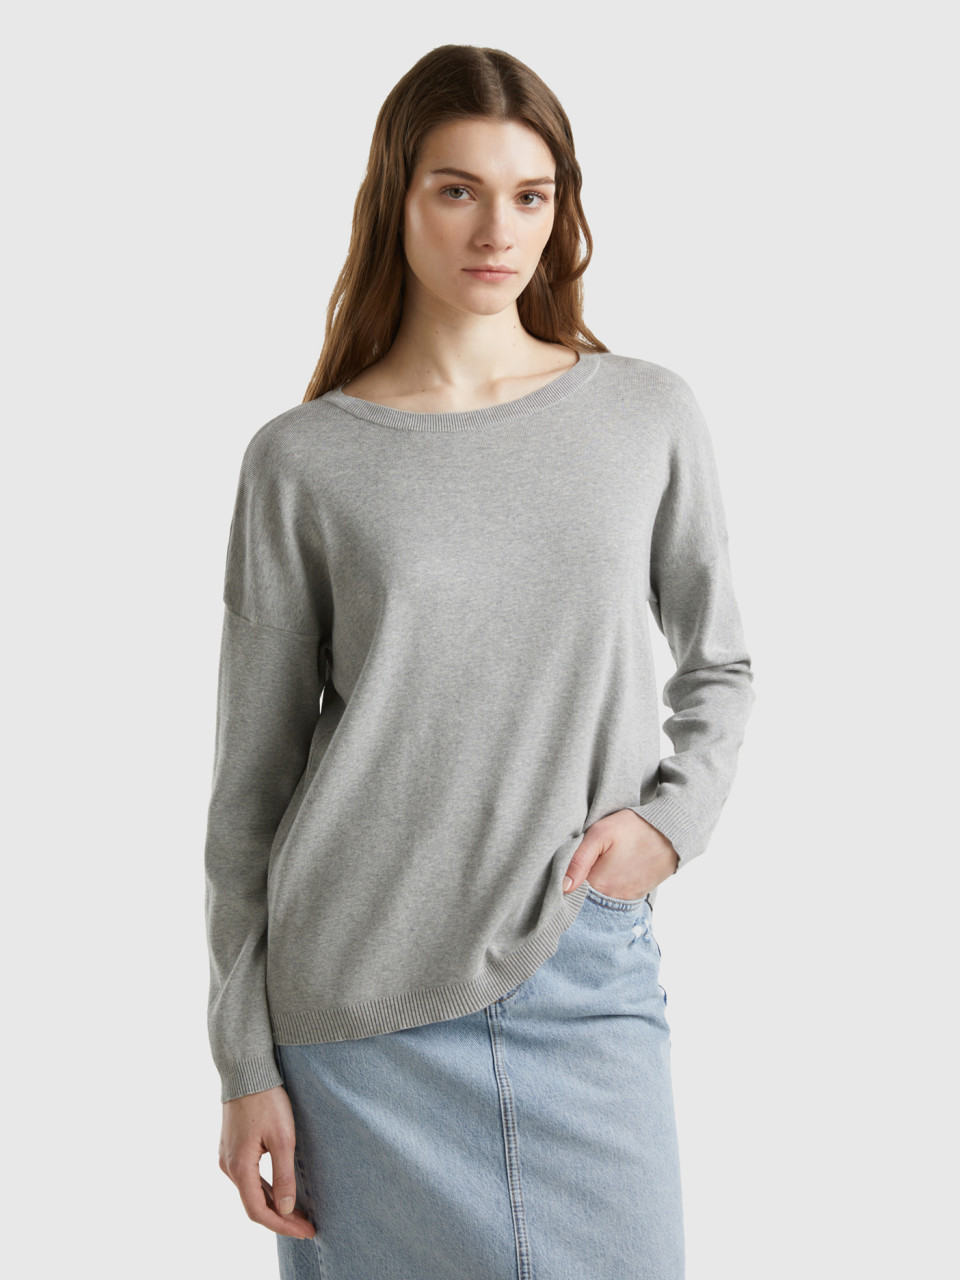 Benetton, Cotton Sweater With Round Neck, Light Gray, Women